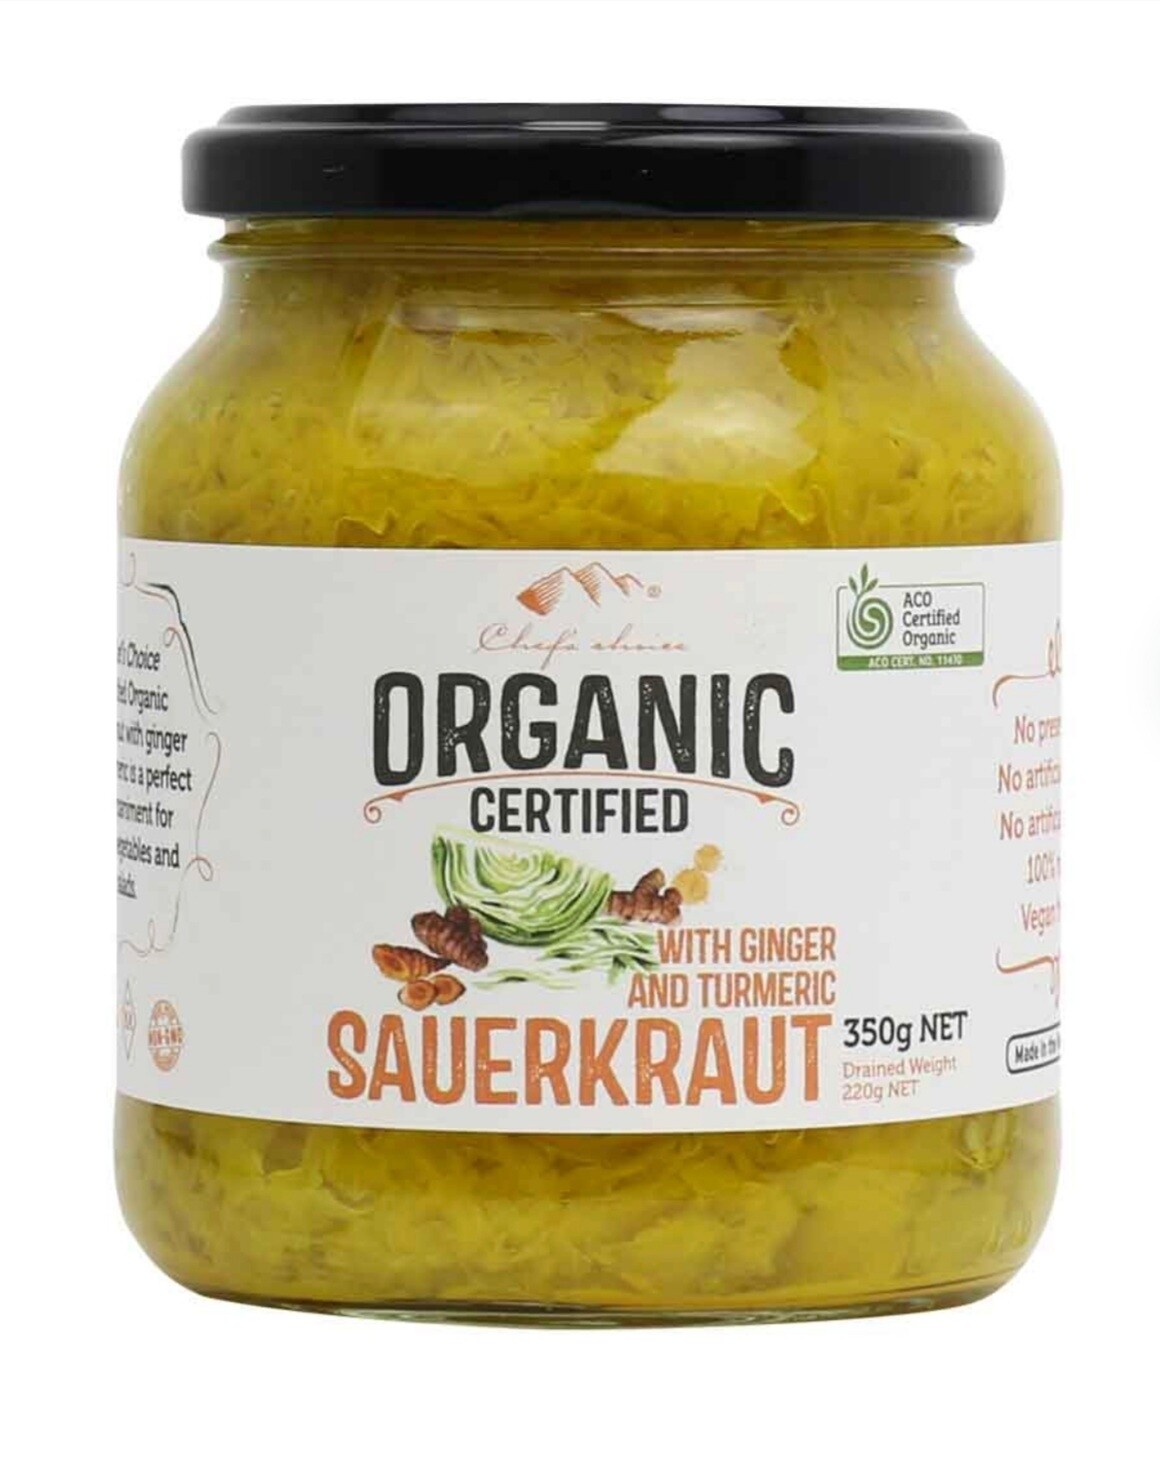 Chef's Choice Organic Sauerkraut with Ginger and Turmeric 350g